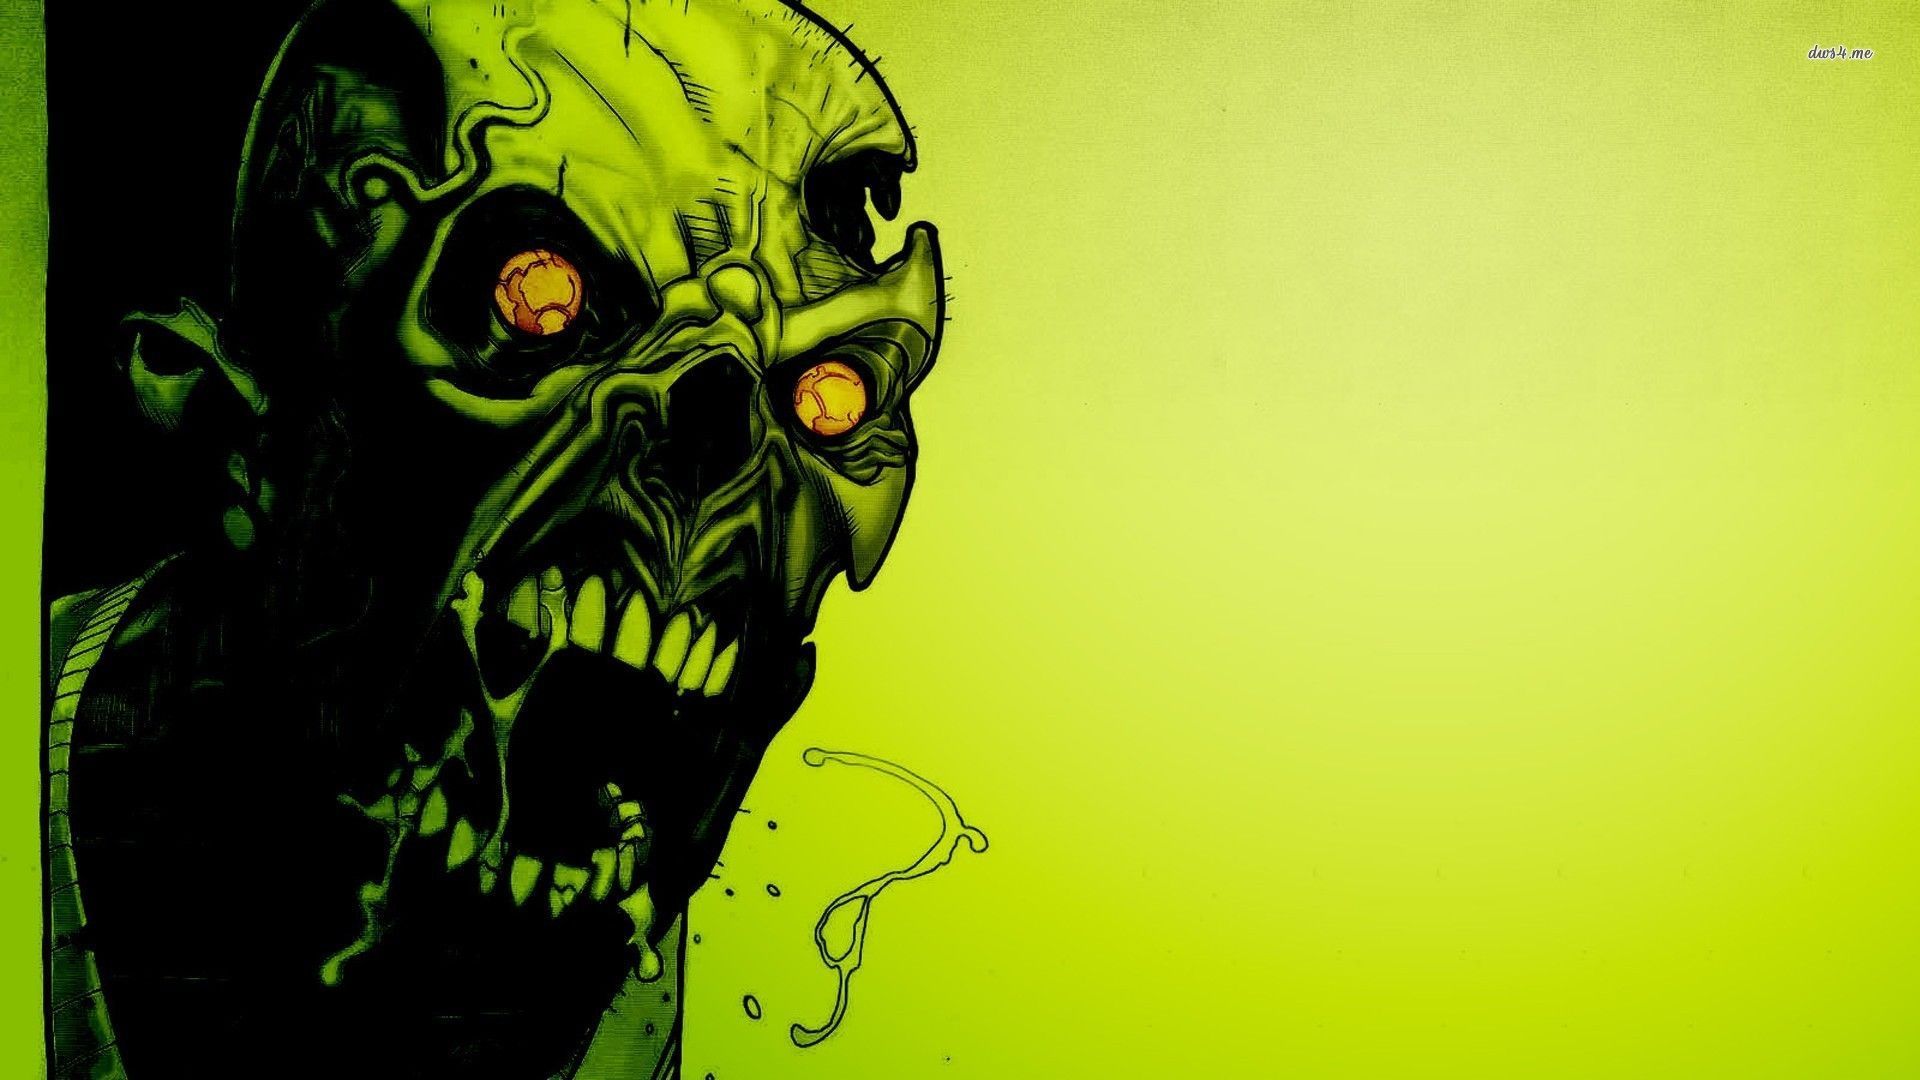 Screaming zombie wallpaper - Digital Art wallpapers - #5467